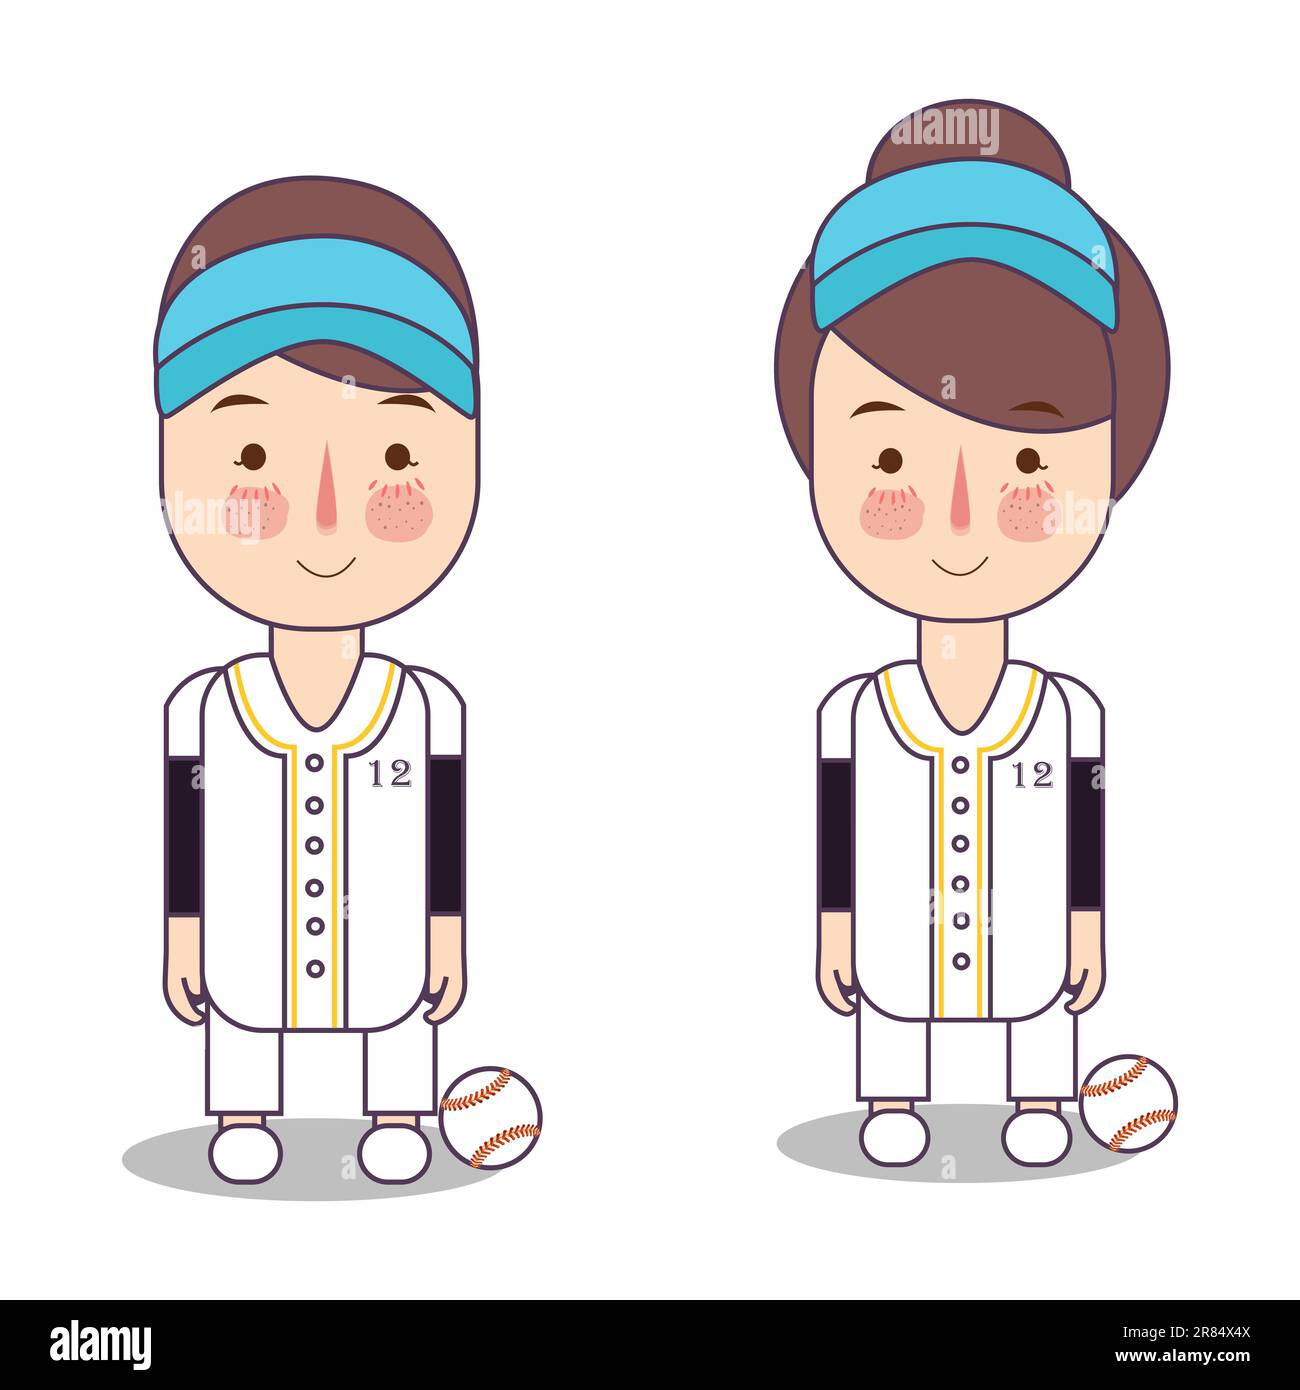 baseball jersey boy and girl uniform clothes sportwear stylish apparel health sport activity athletic match Stock Vector